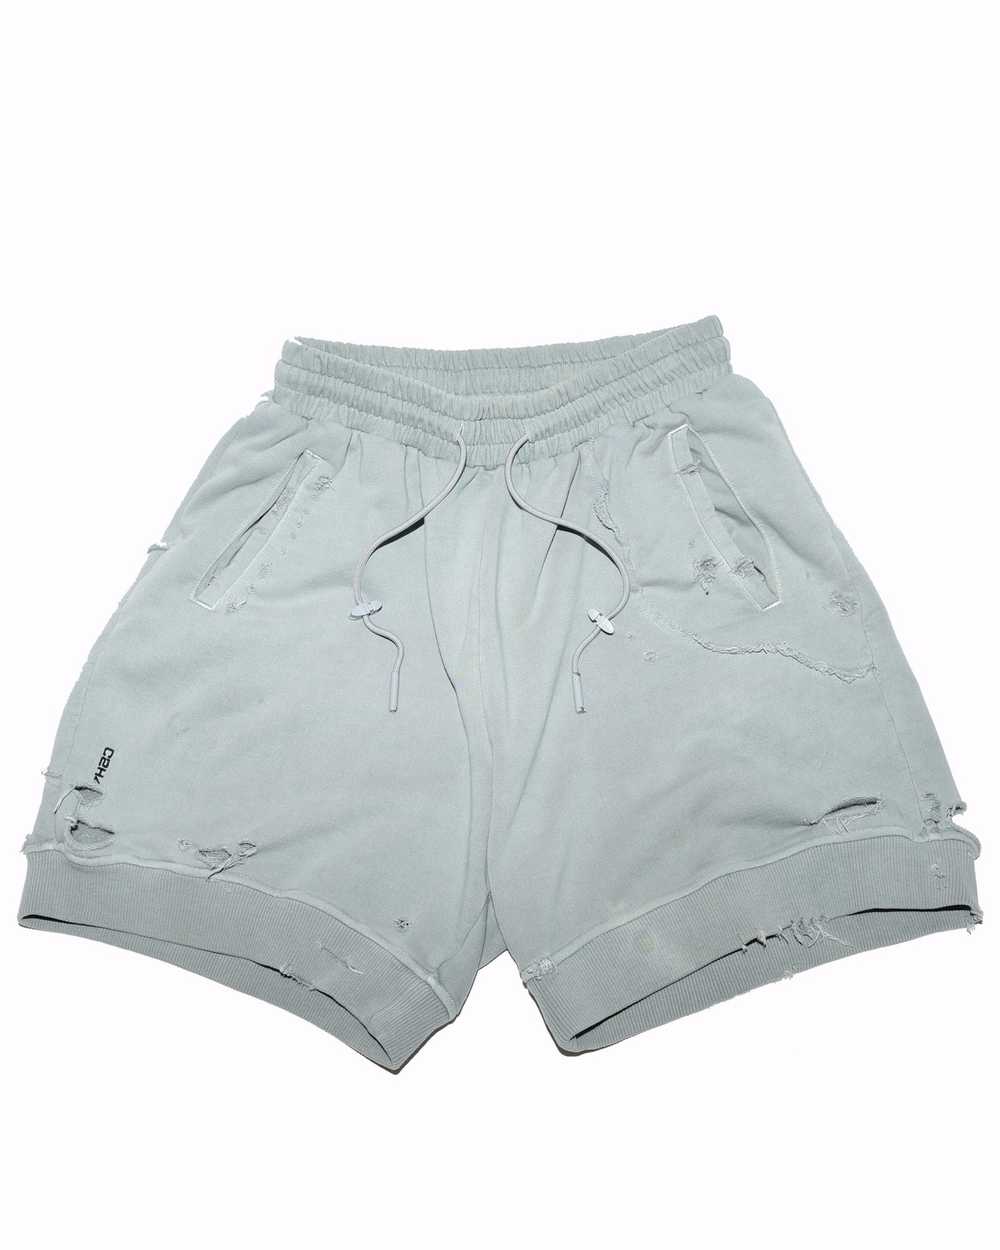 C2h4 C2H4 Distressed Sweat Shorts - image 1